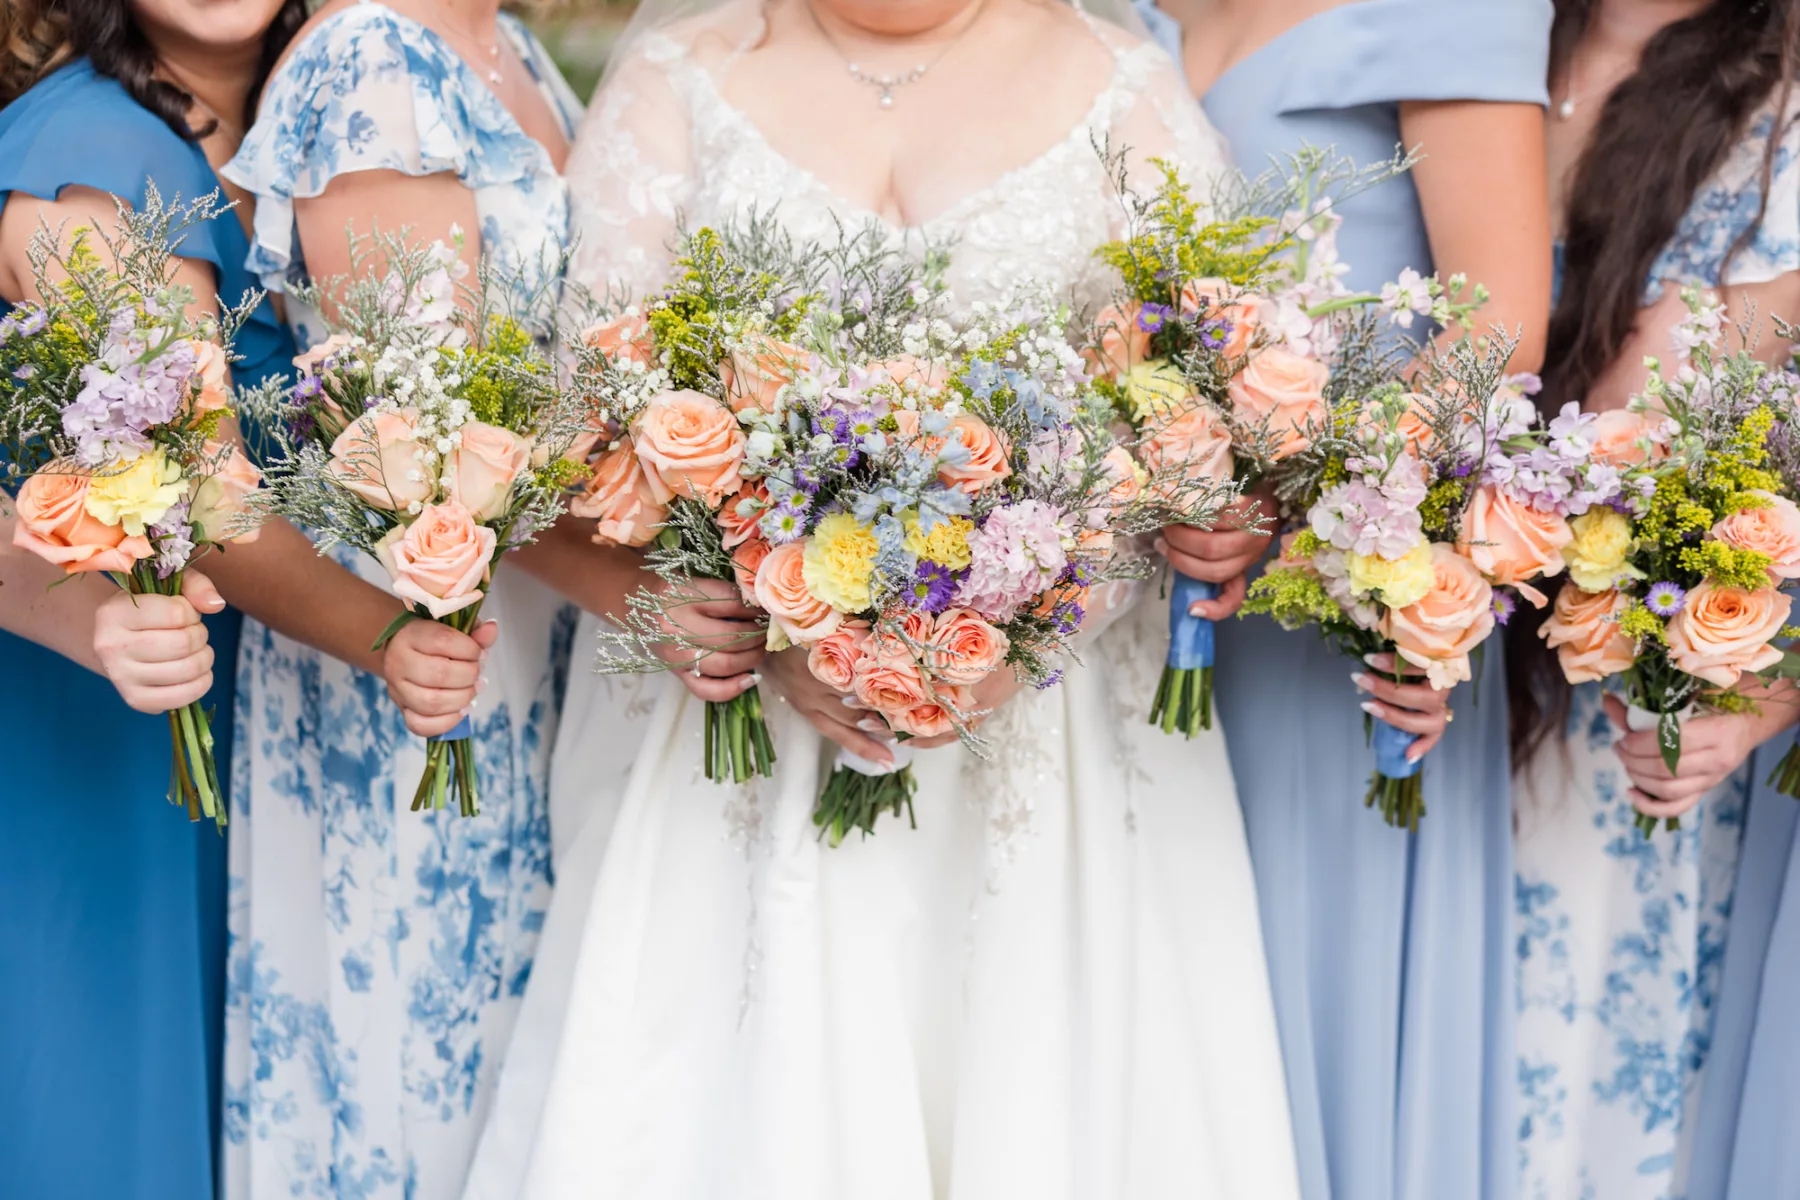 Spring Wedding Bridal Bouquet Ideas with Peach Roses, Baby's Breath, Purple Daisies, Pink Hydrangeas